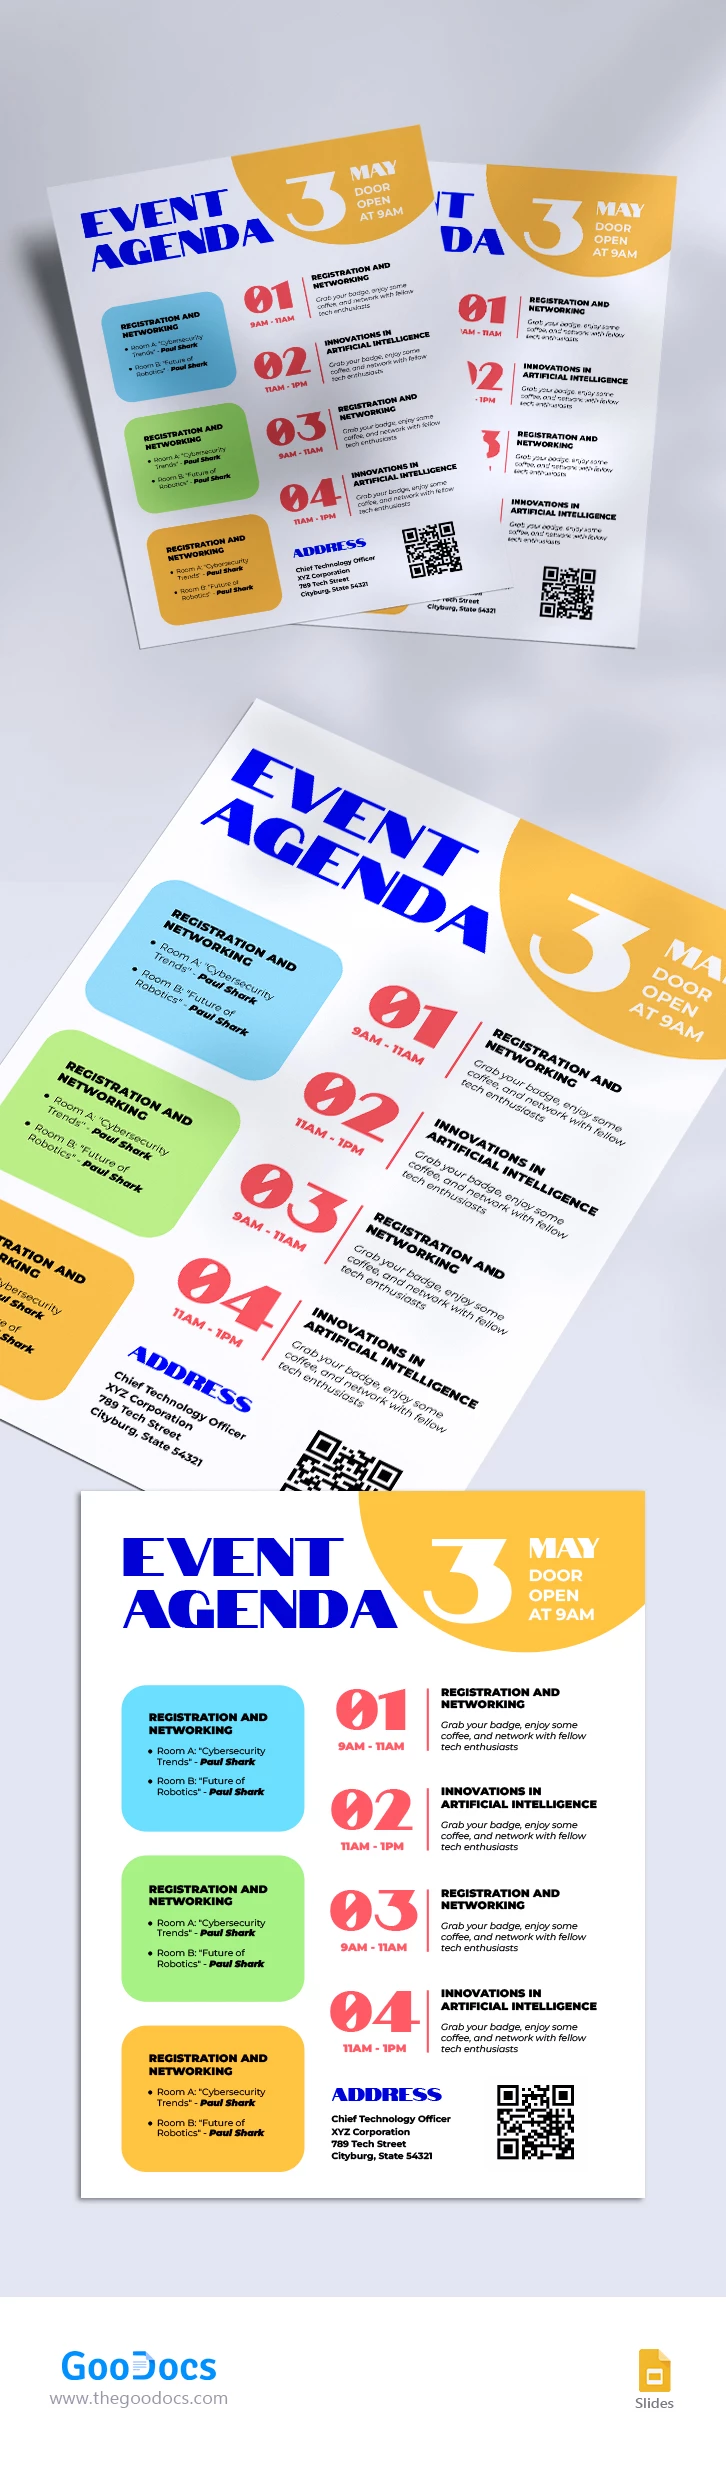 Event Agenda - free Google Docs Template - 10067678